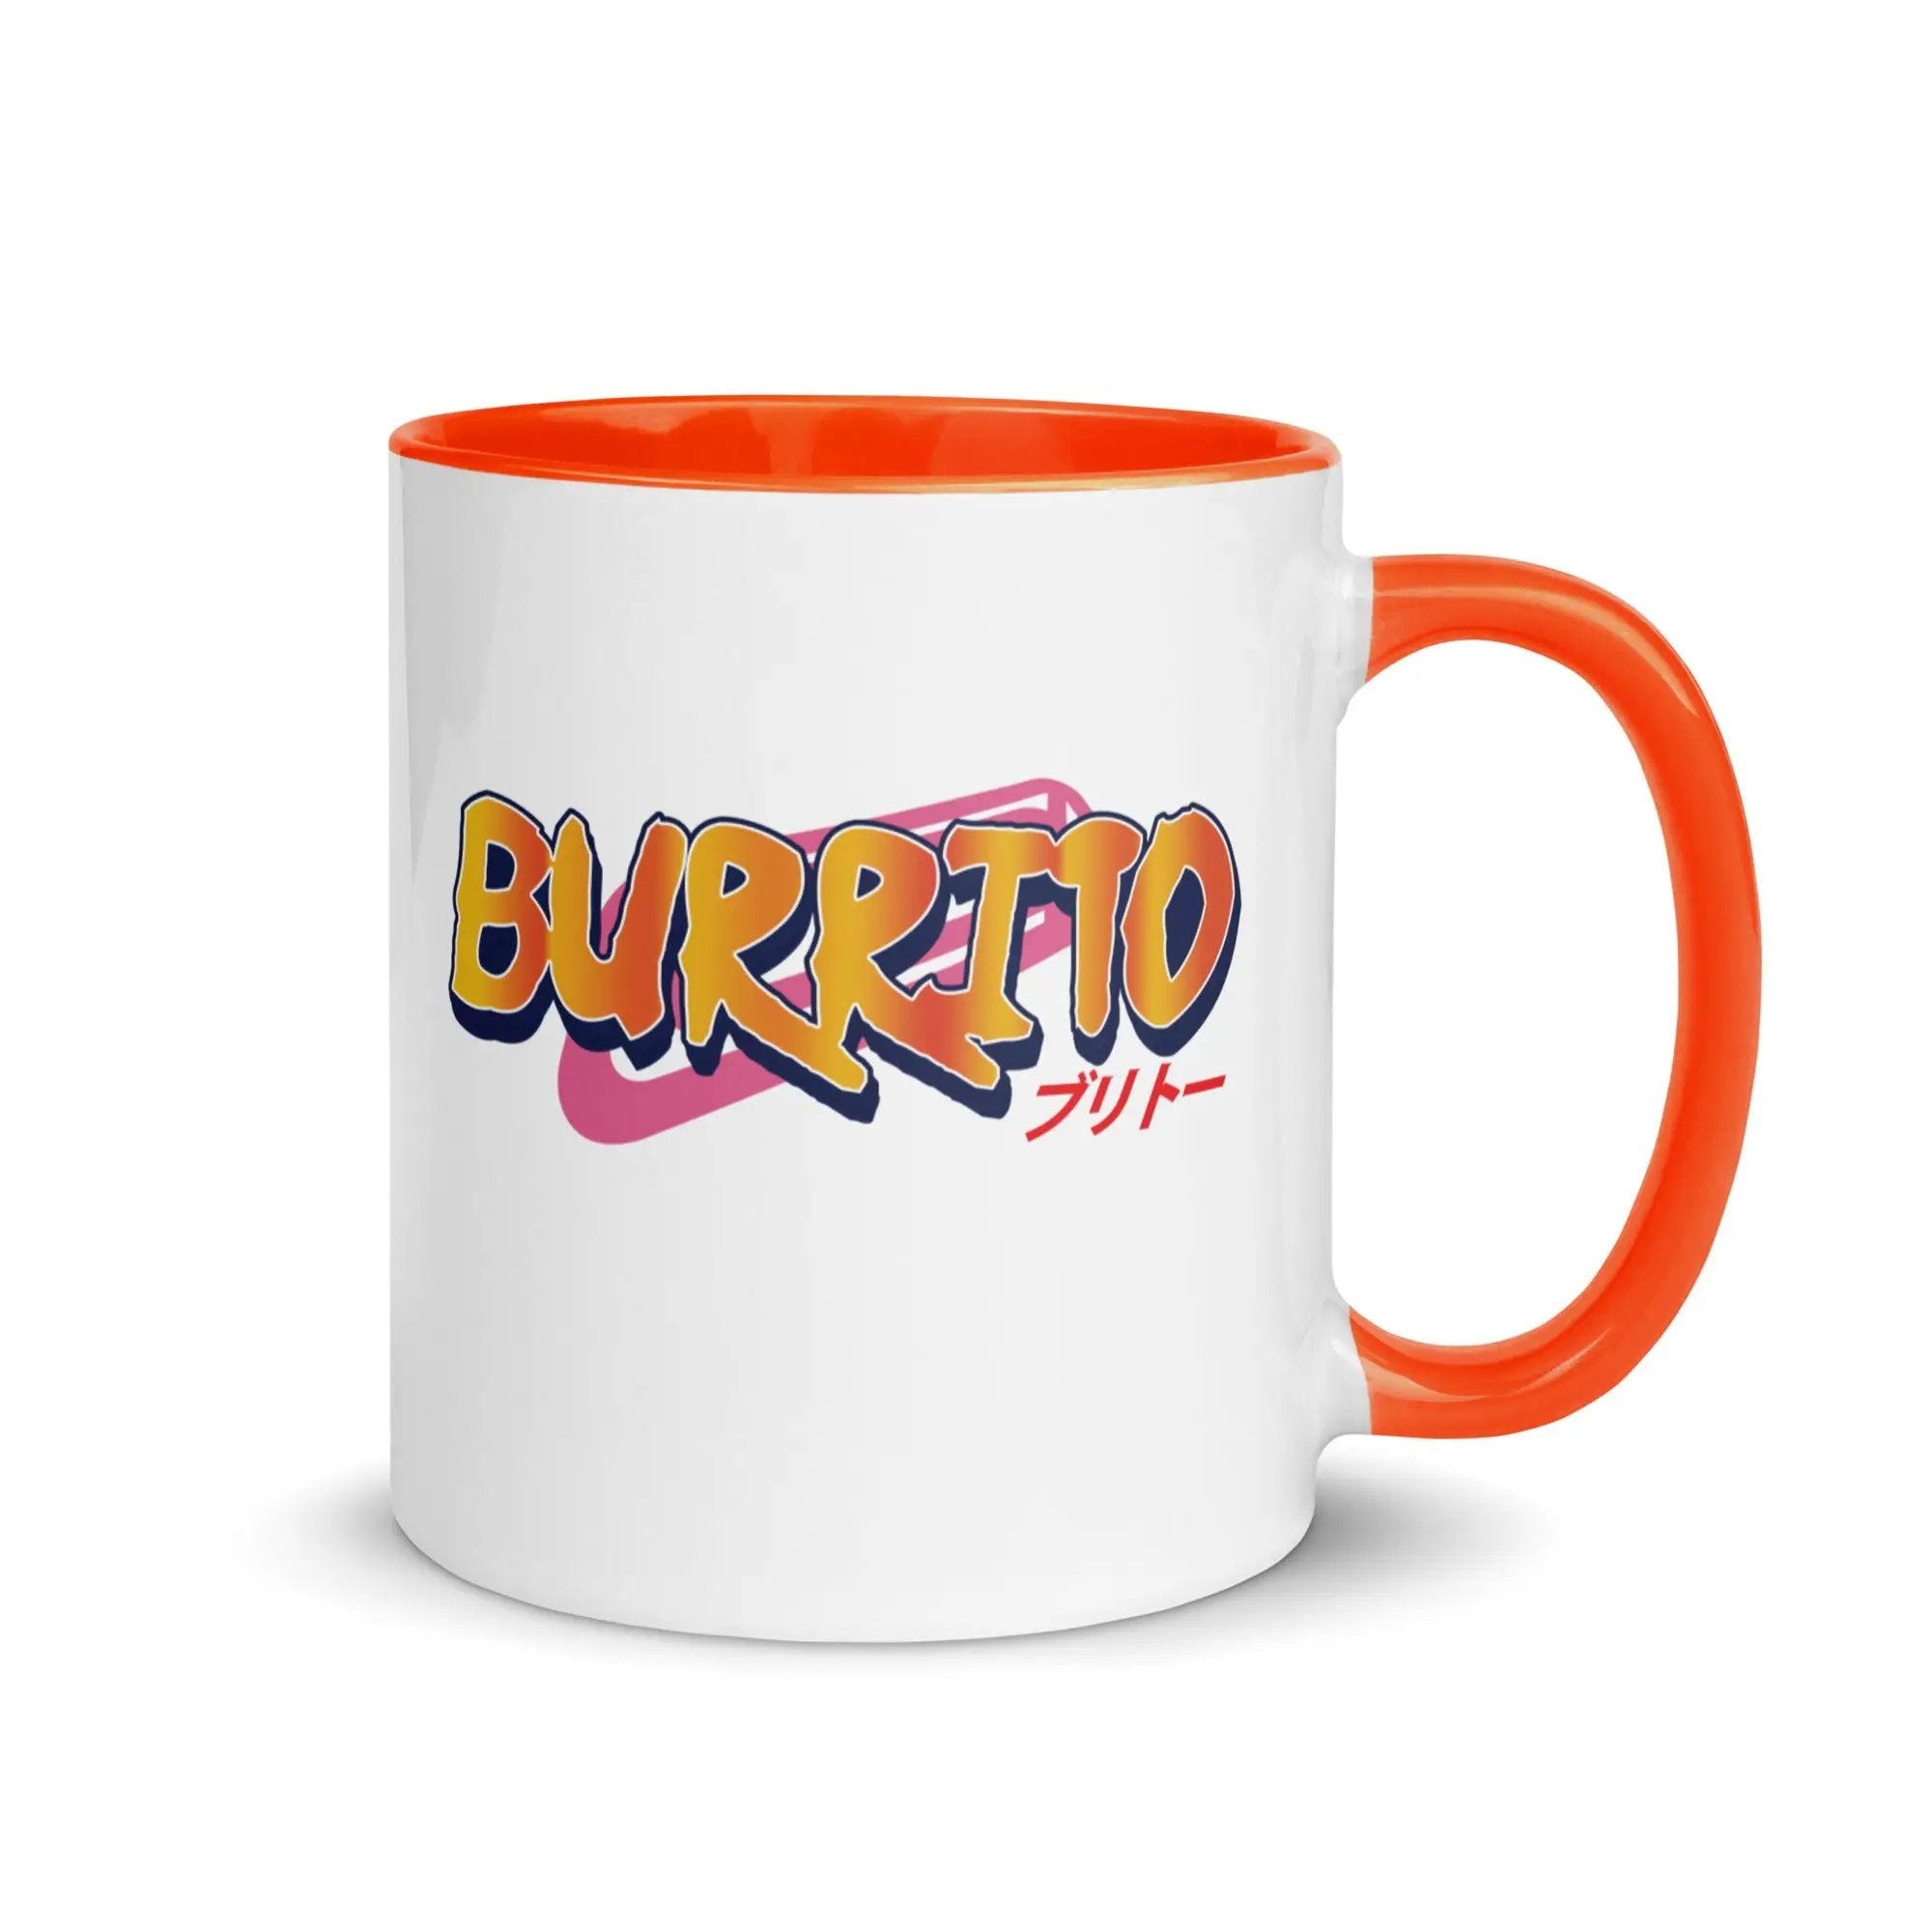 Burrito Mug with Color Inside